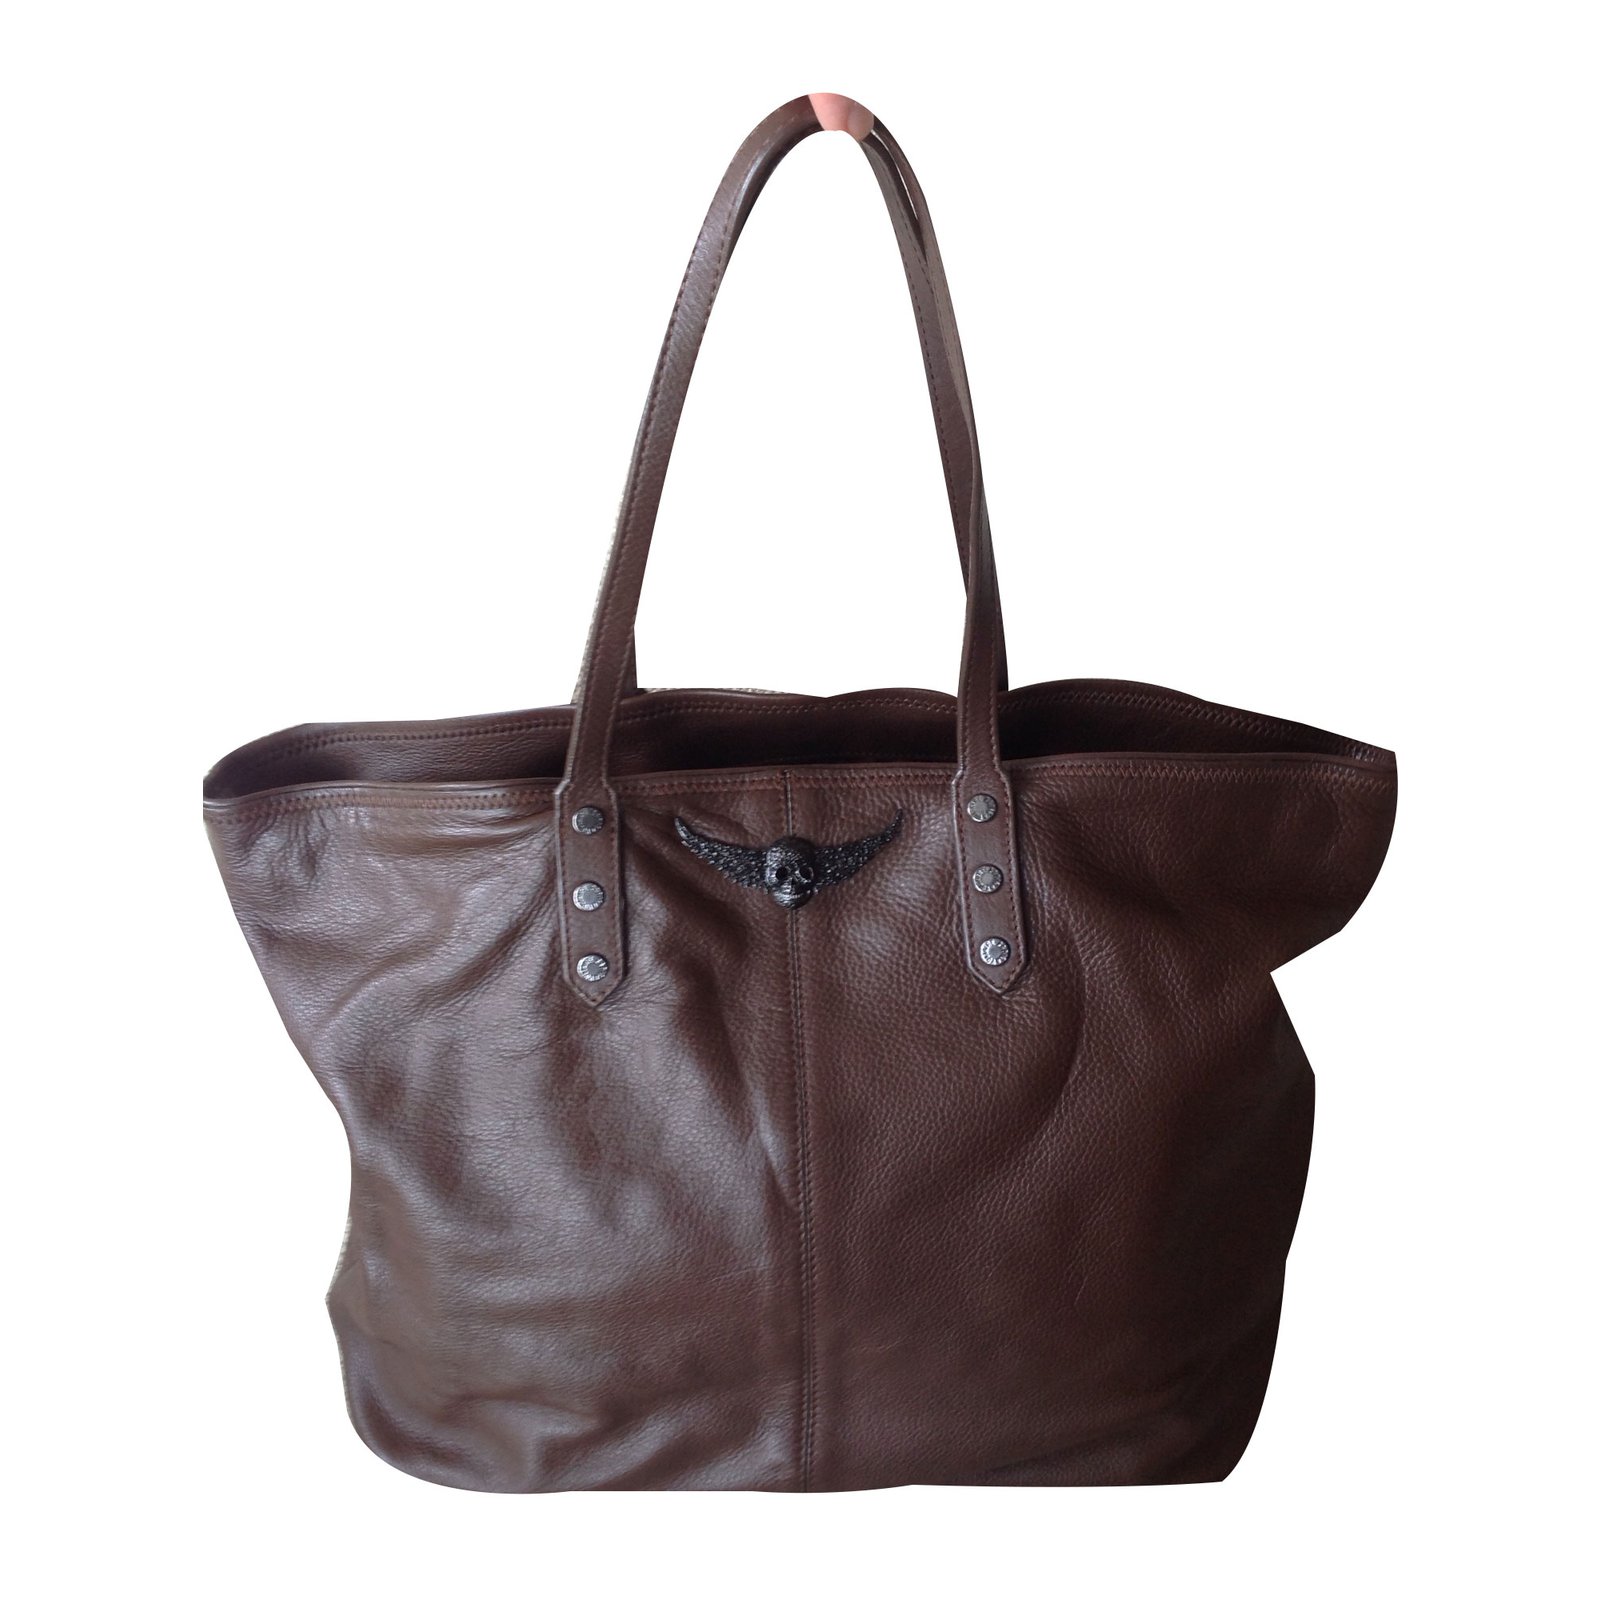 Zadig & Voltaire Bags & Handbags for Women for sale